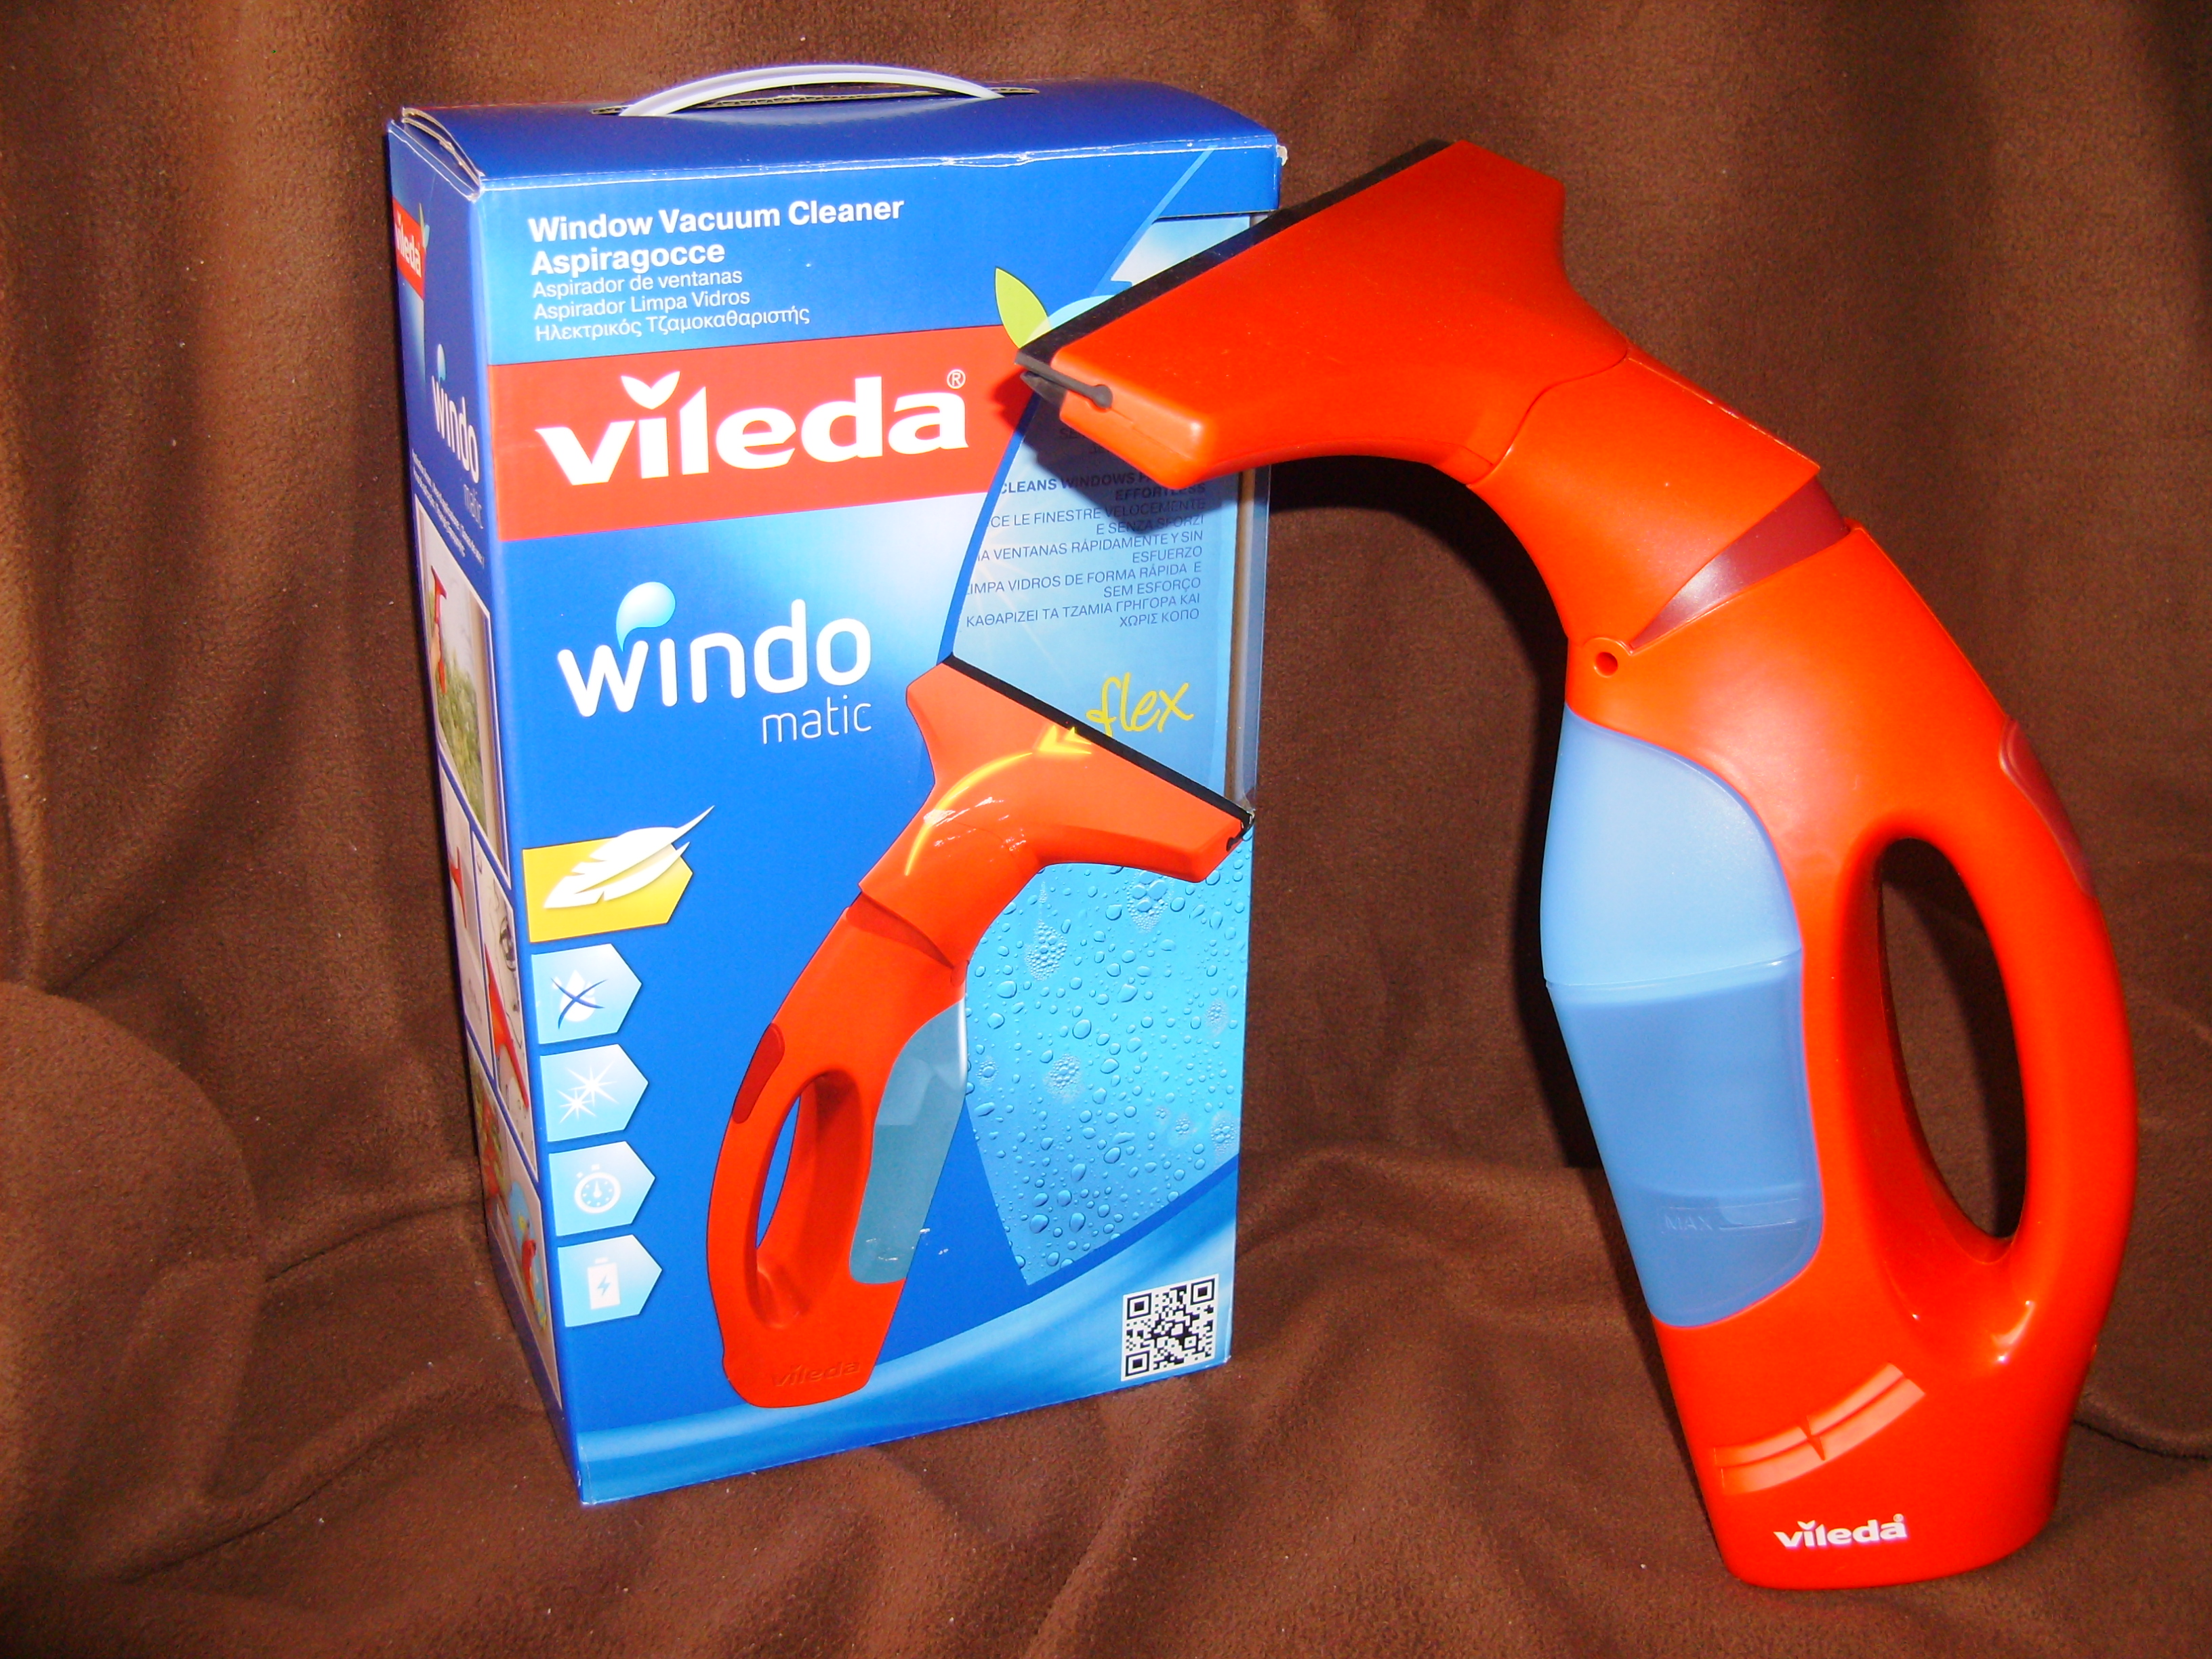 WindoMatic - Vileda (5).JPG